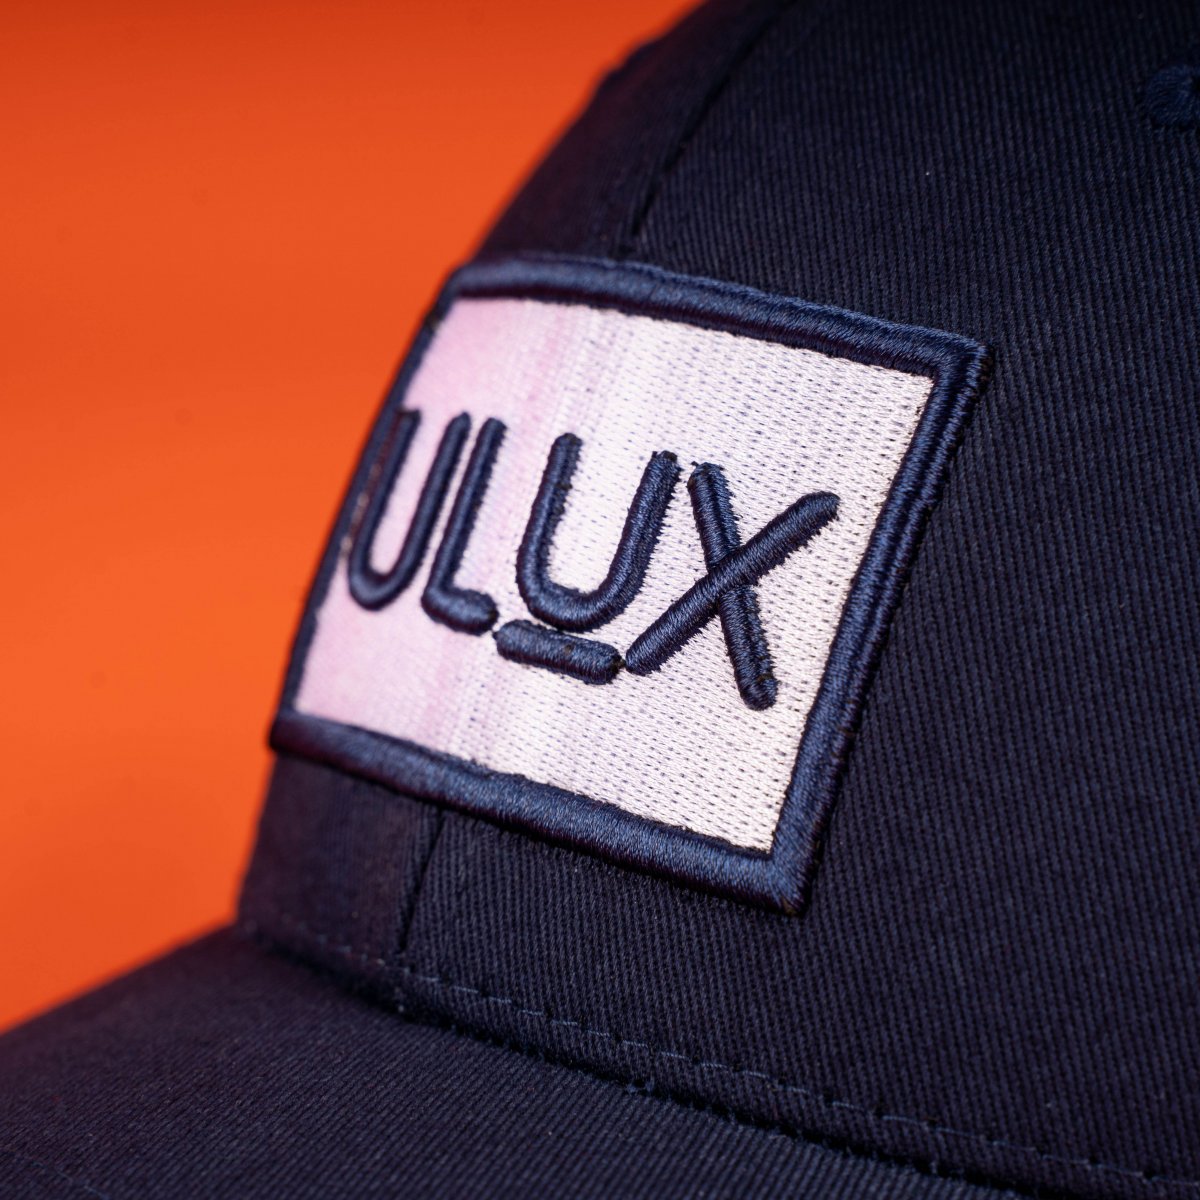 Mũ (nón) Golf Pro Cap ULUX UMG103- Xanh Navy